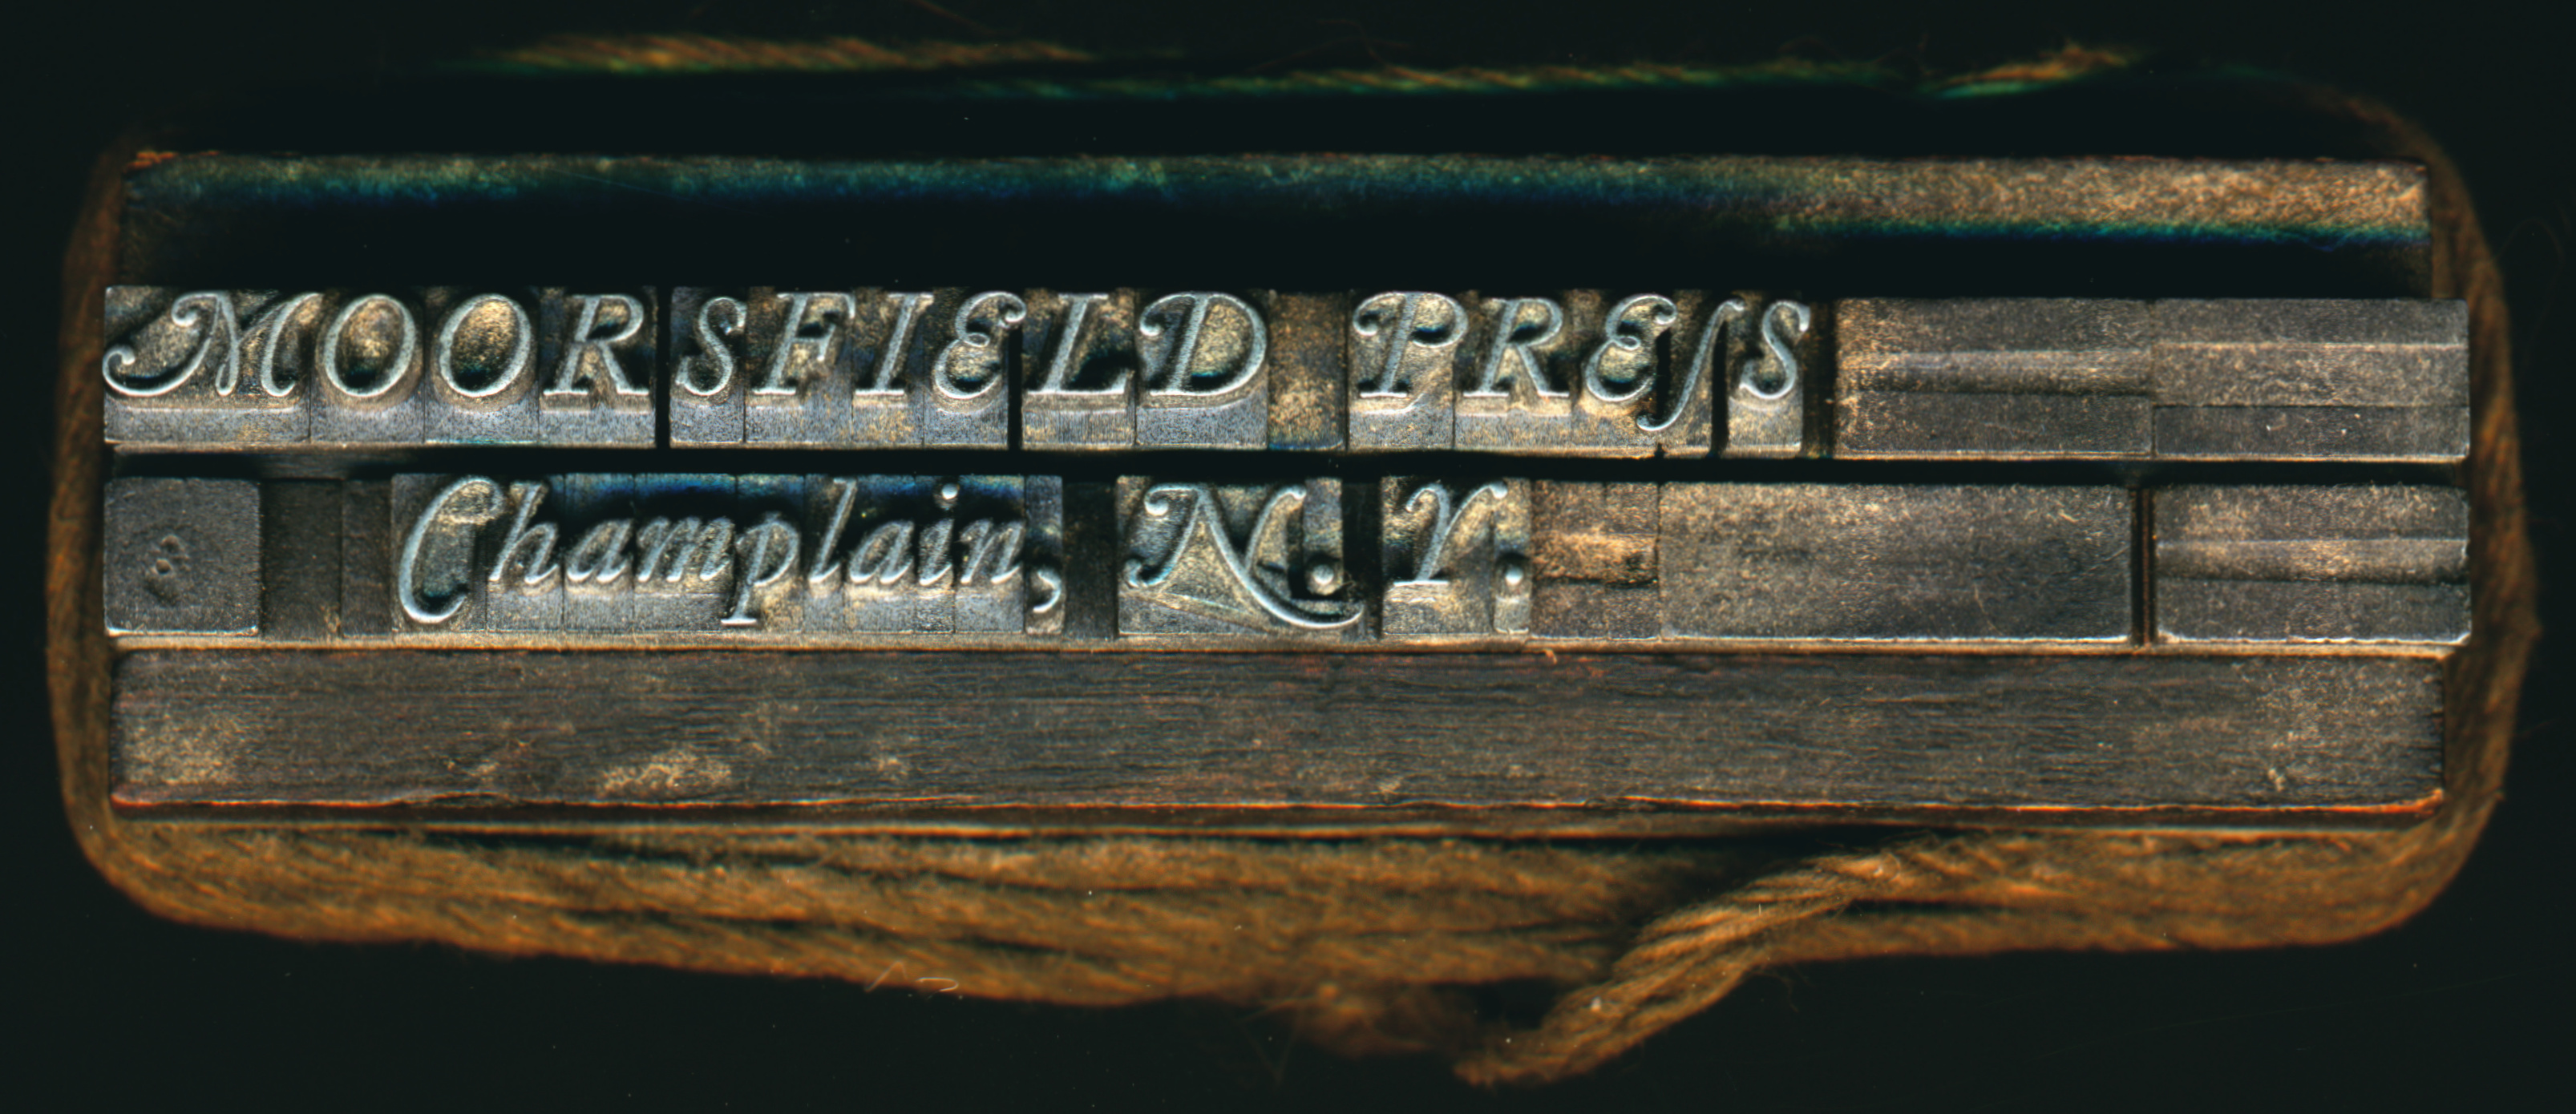 moorsfield press name typeset full